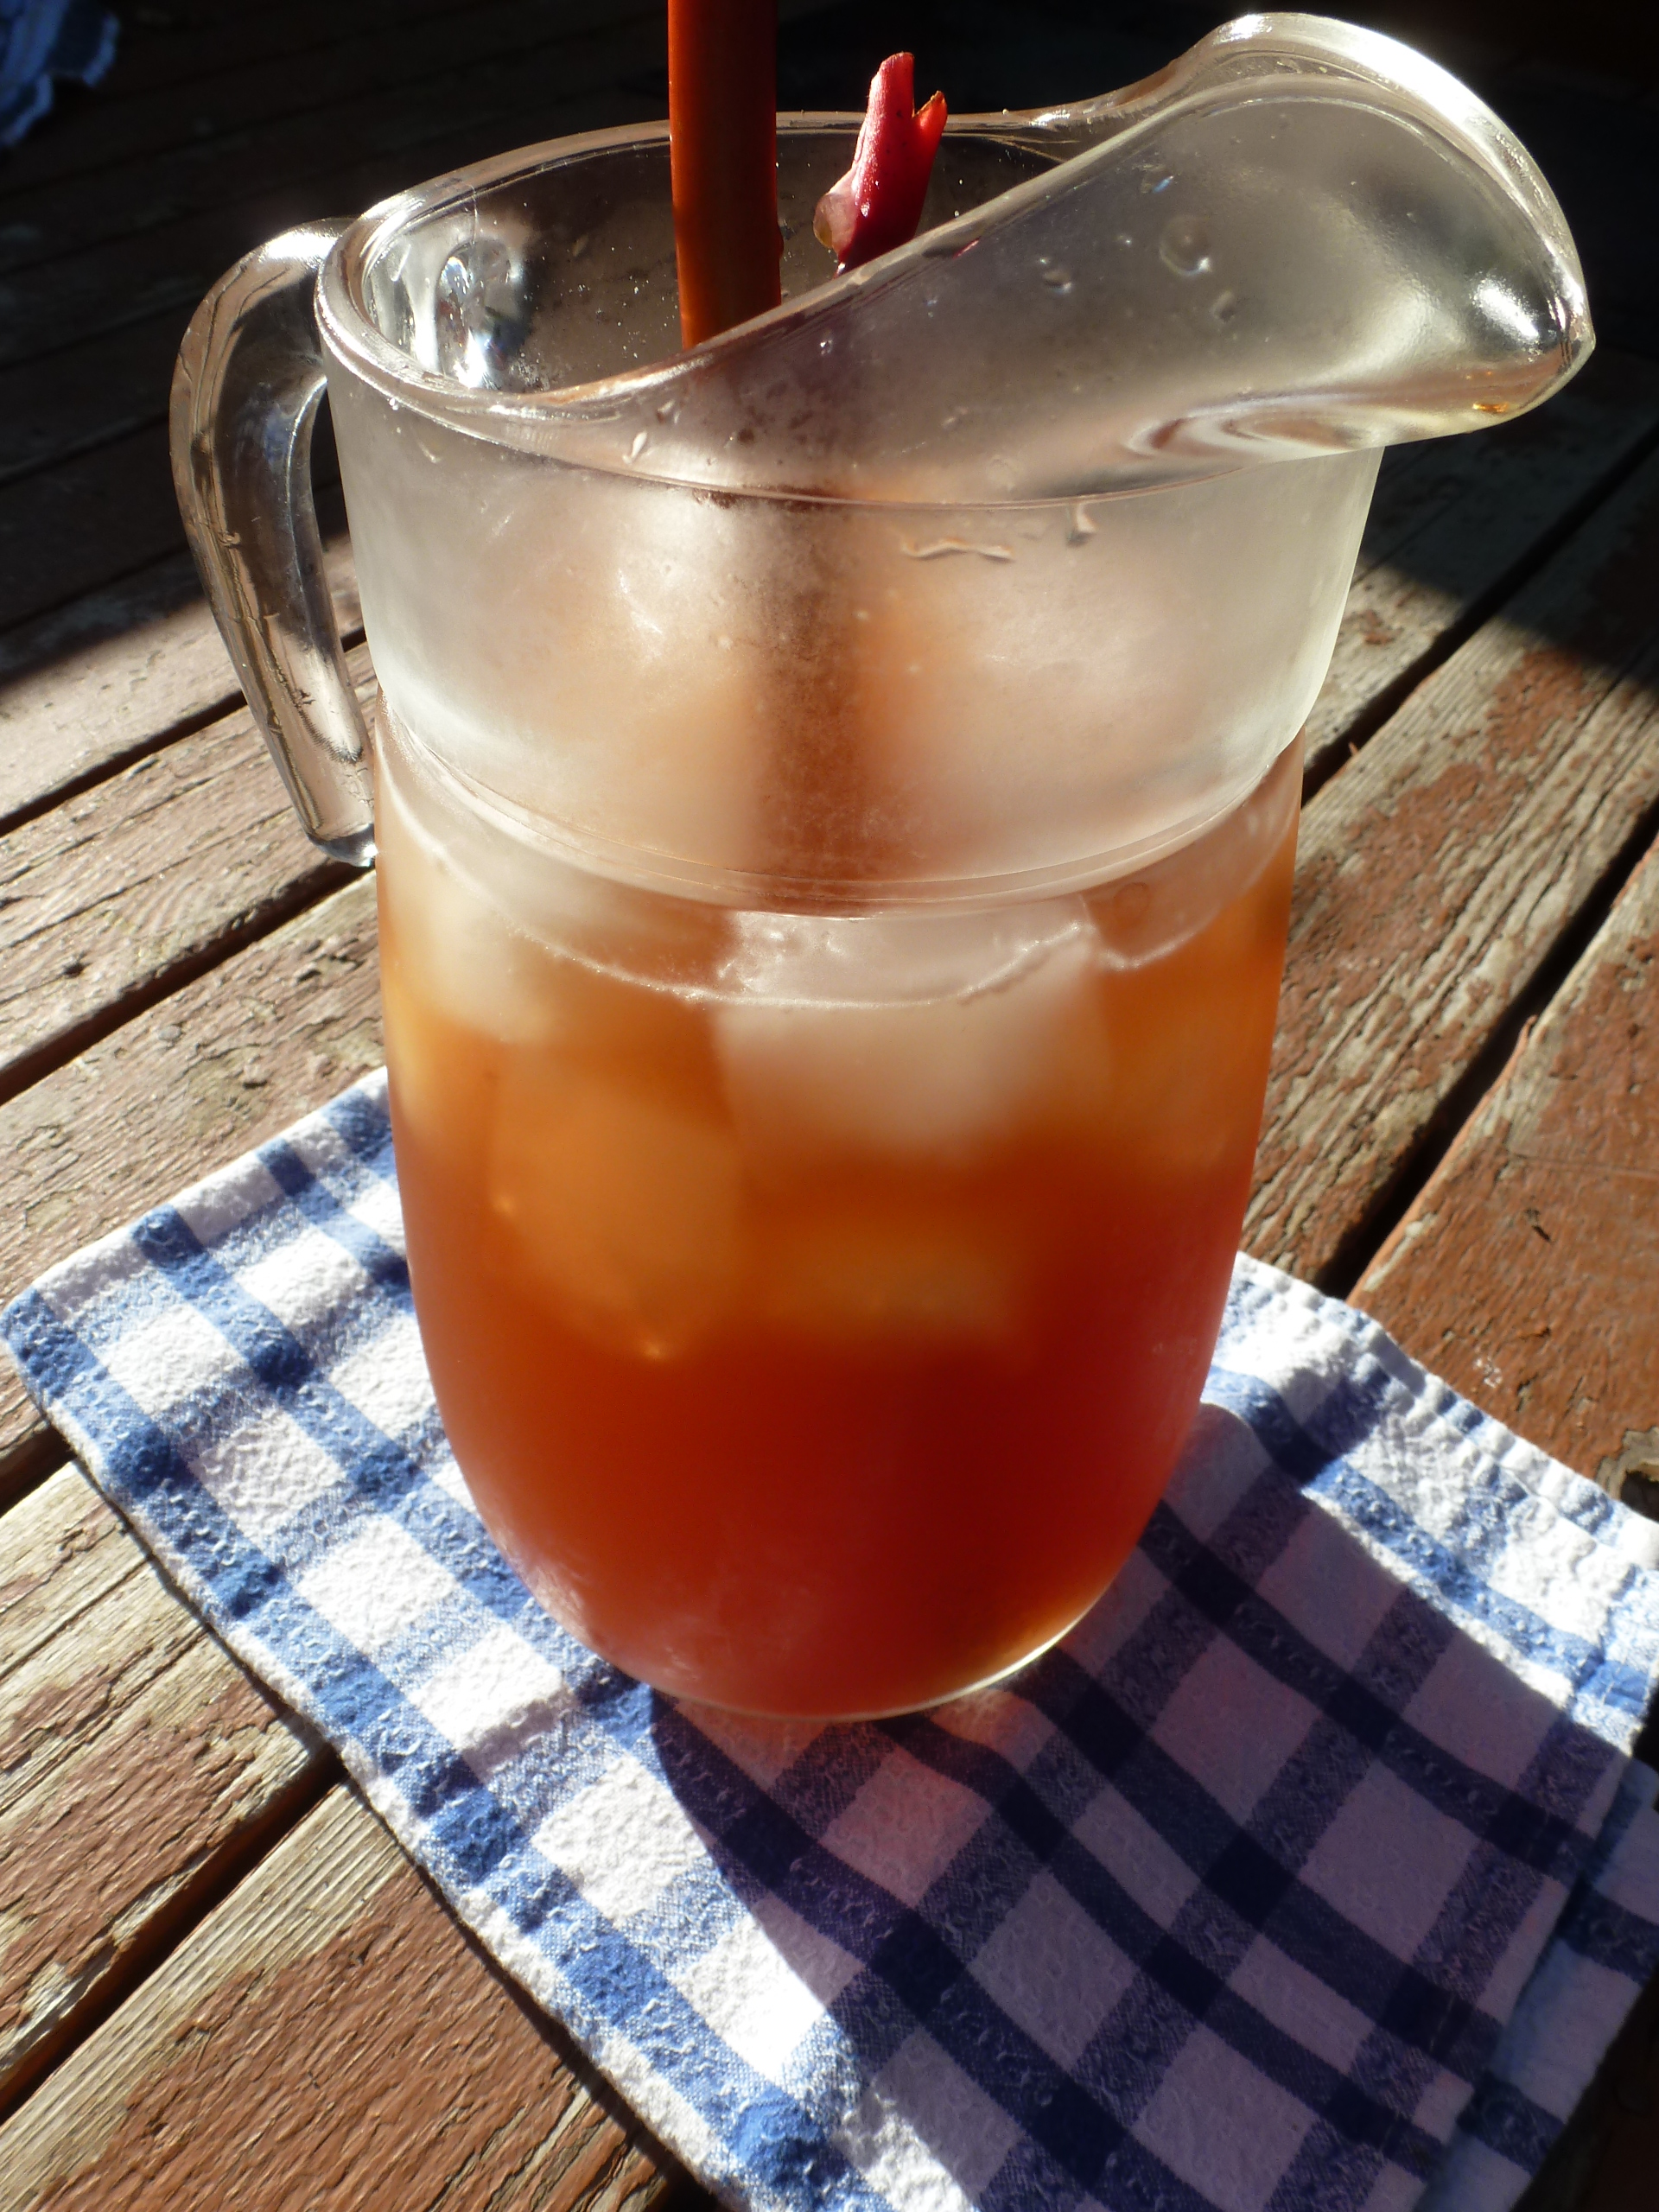 A pitcher of rhubarb iced tea.